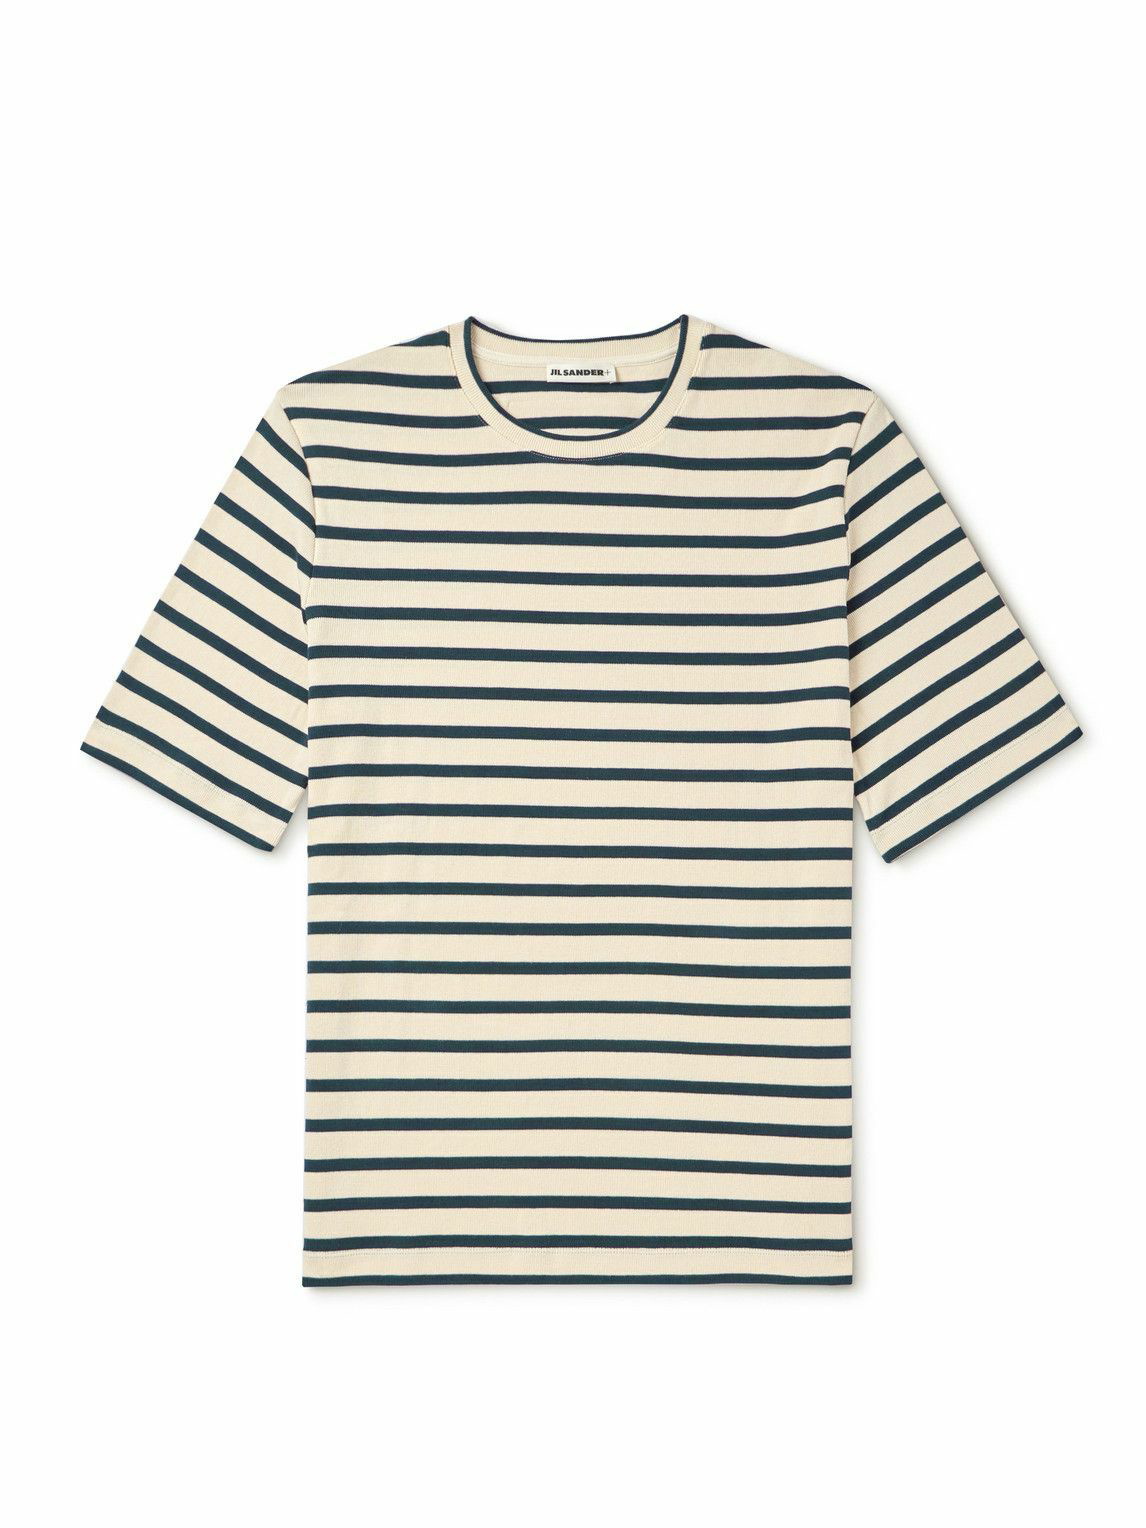 Jil Sander - Logo-Appliquéd Striped Cotton T-Shirt - Neutrals Jil Sander